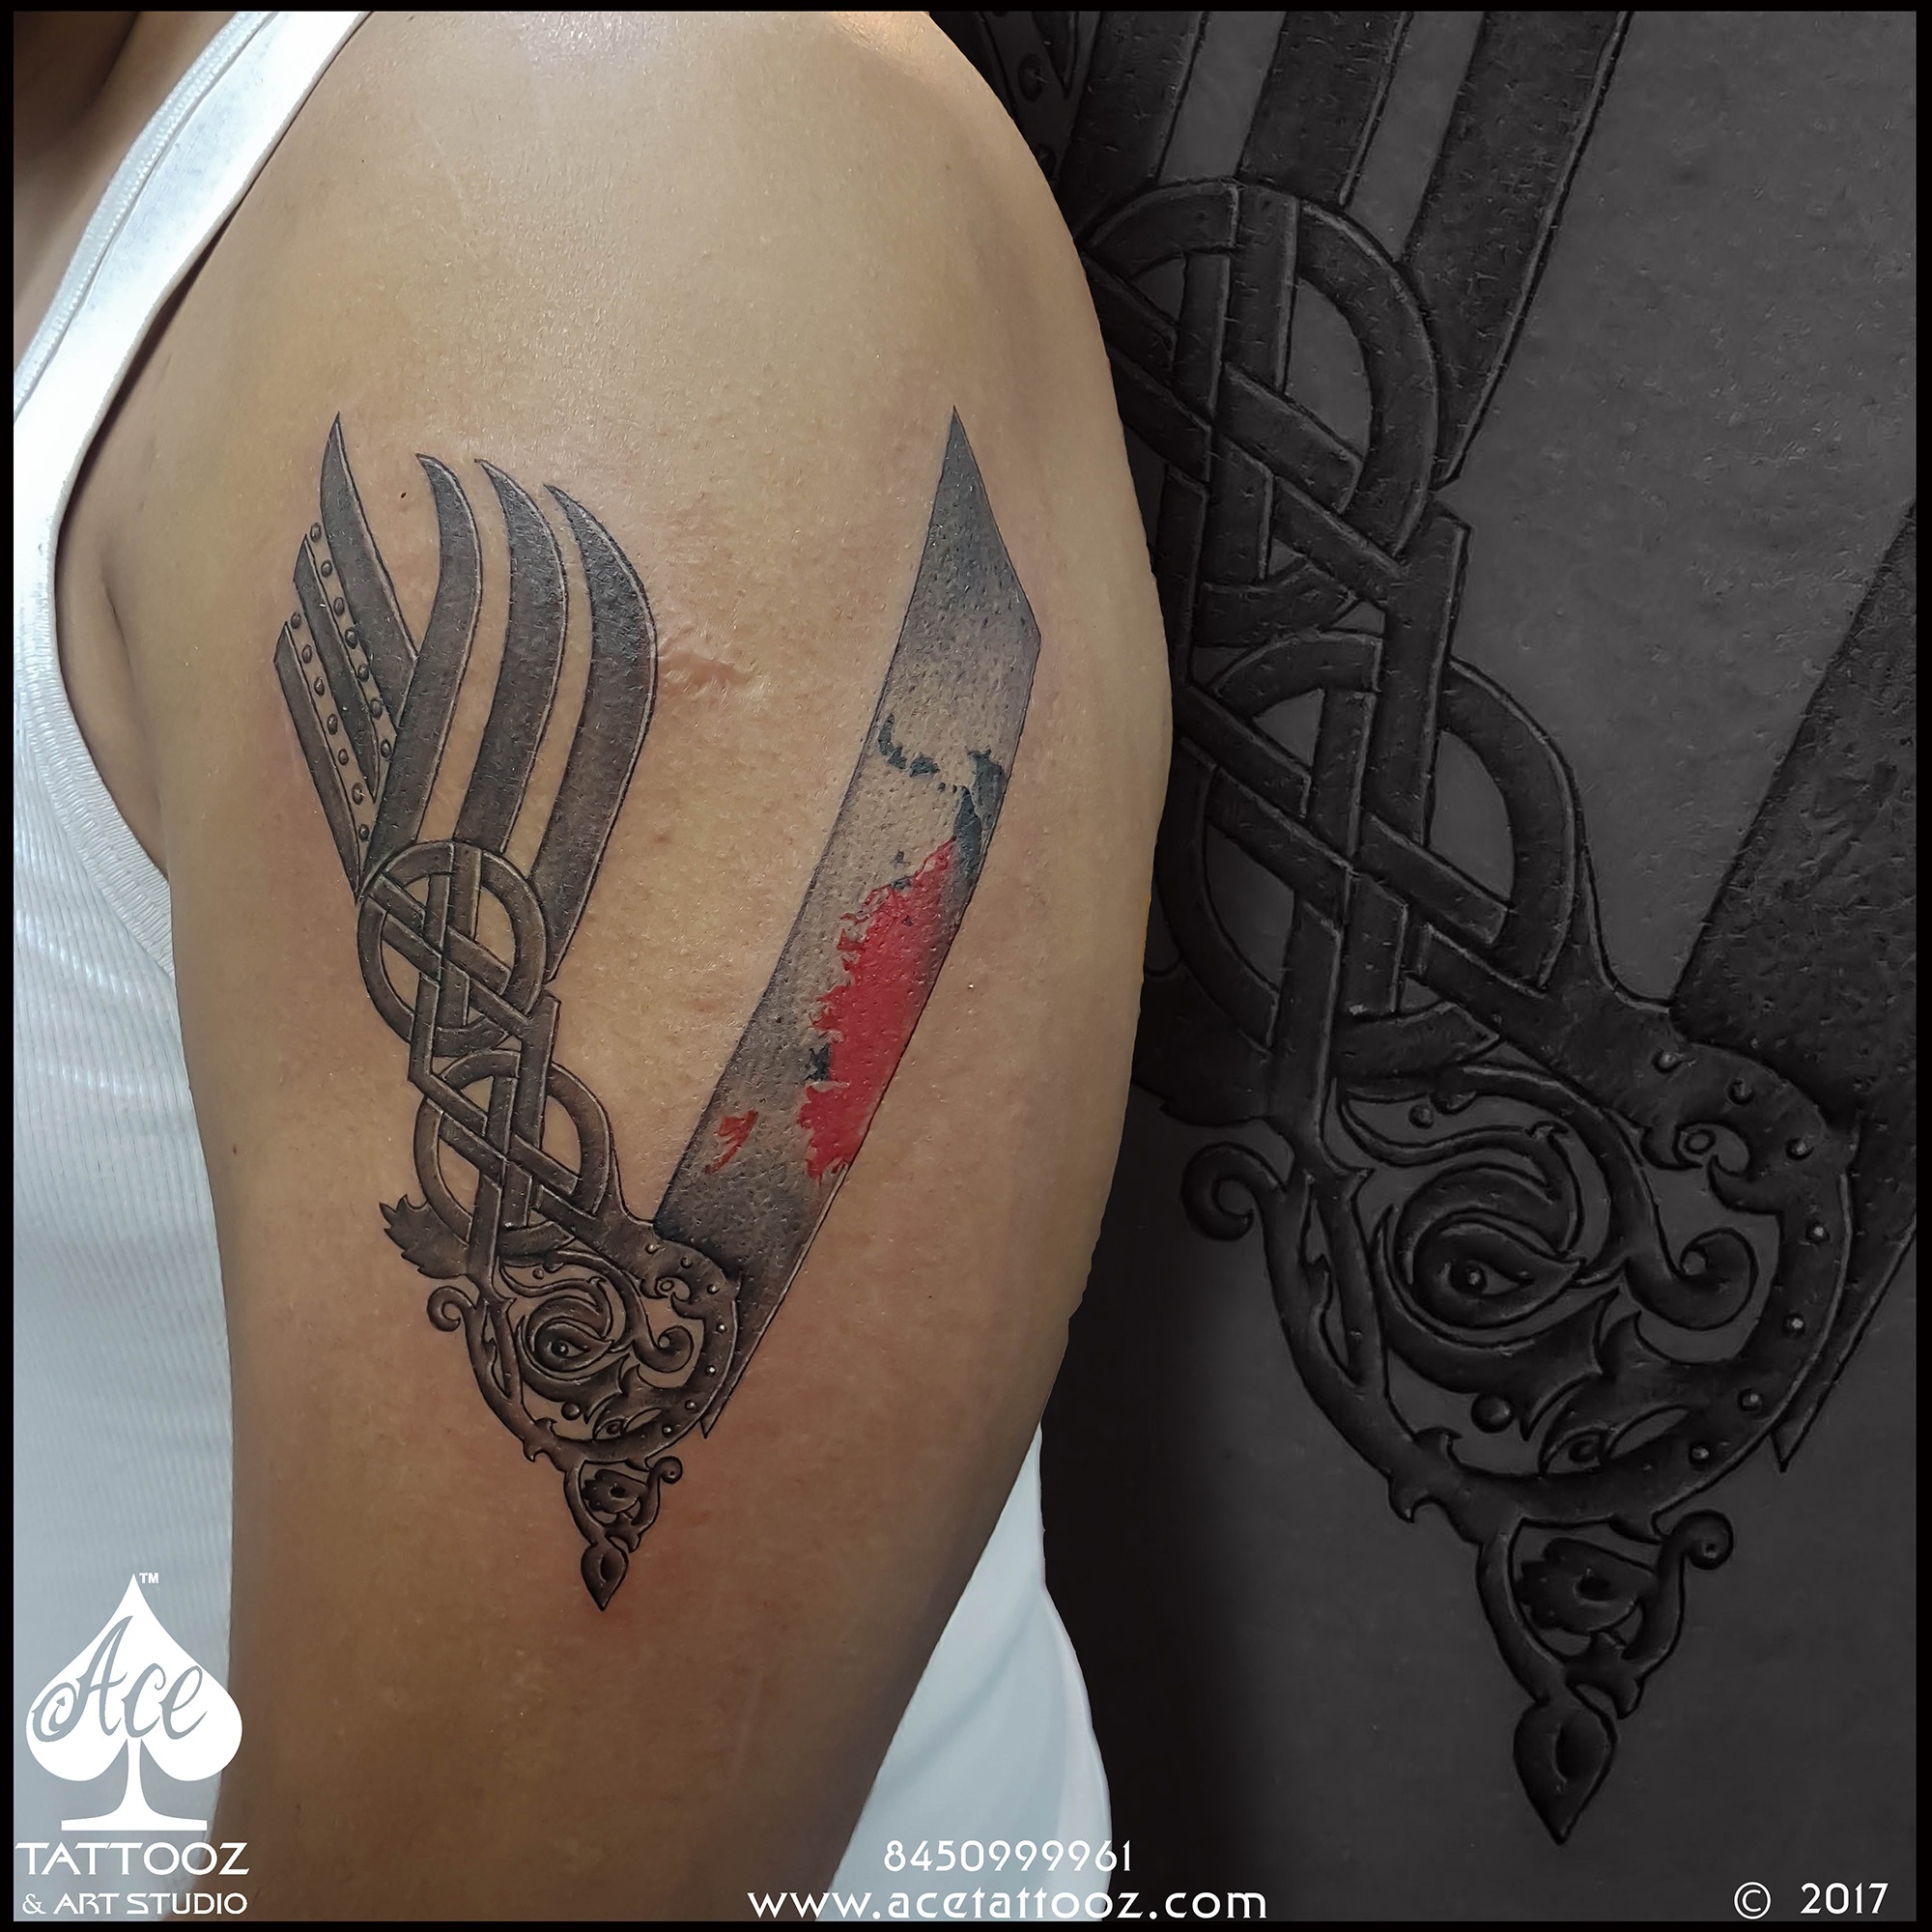 Tattoos: Expressing Good and Evil Through Ink – 40 Designs - inktat2.com